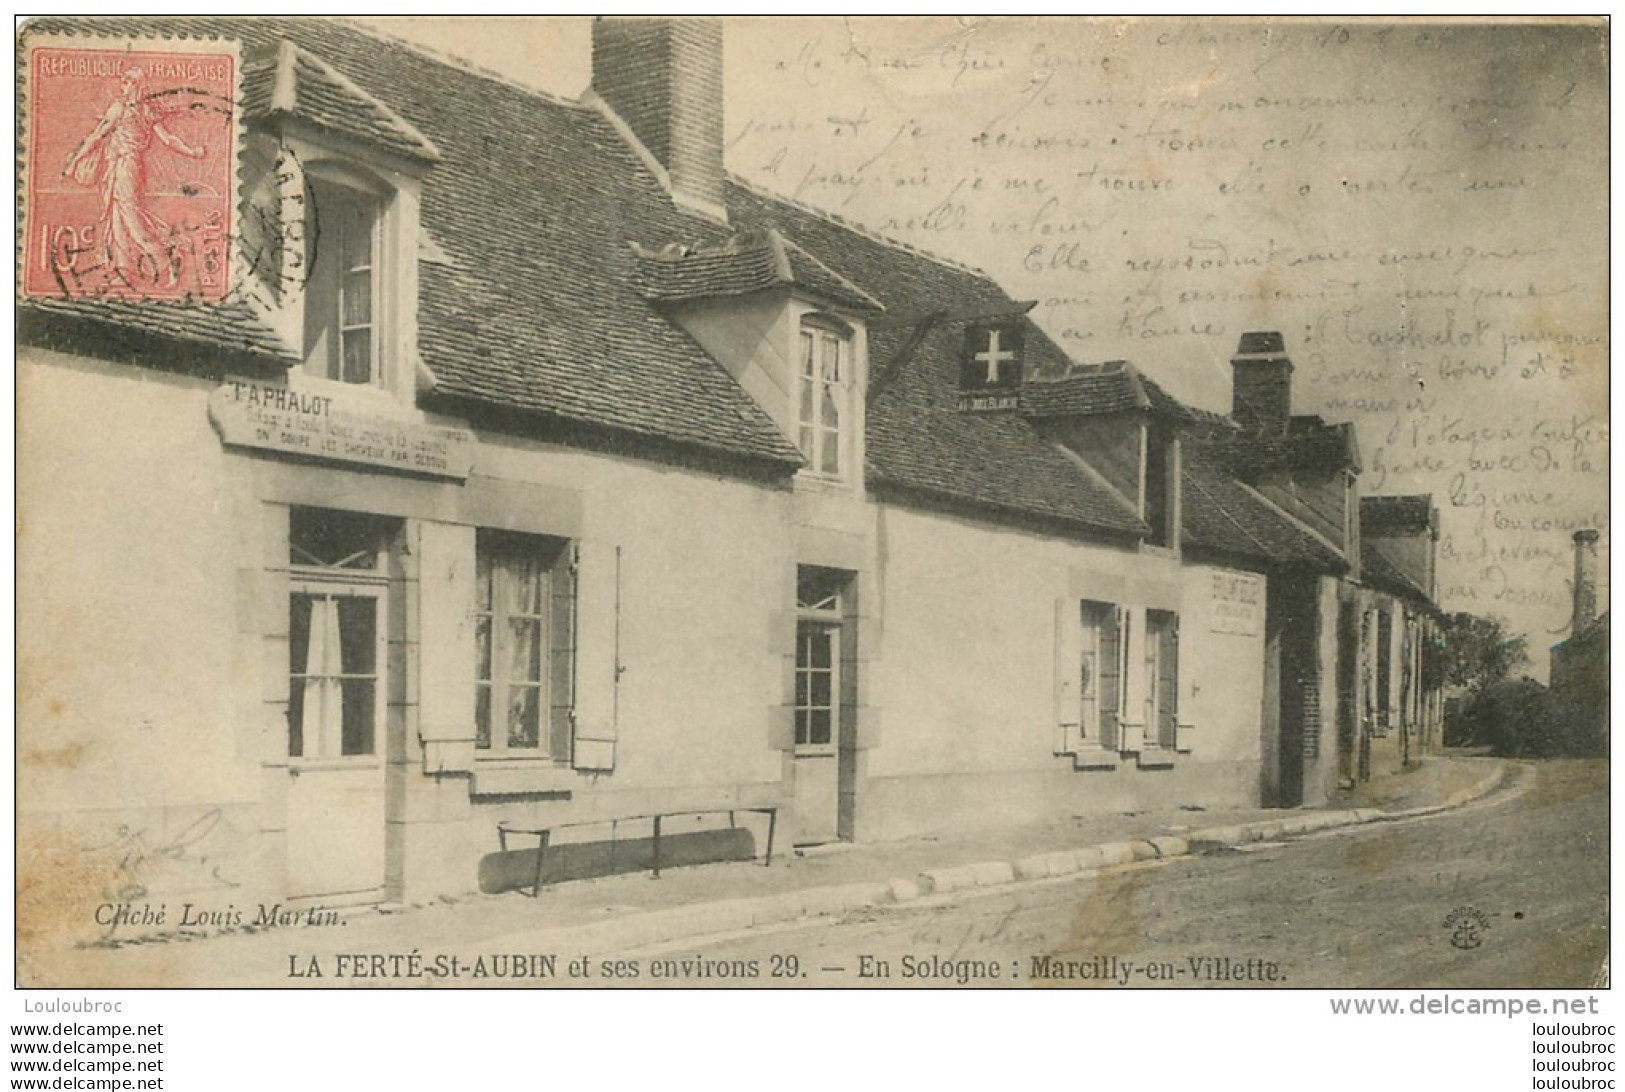 MARCILLY EN VILLETTE TAPHALOT PERRUQUIER CLICHE LOUIS MARTIN - La Ferte Saint Aubin